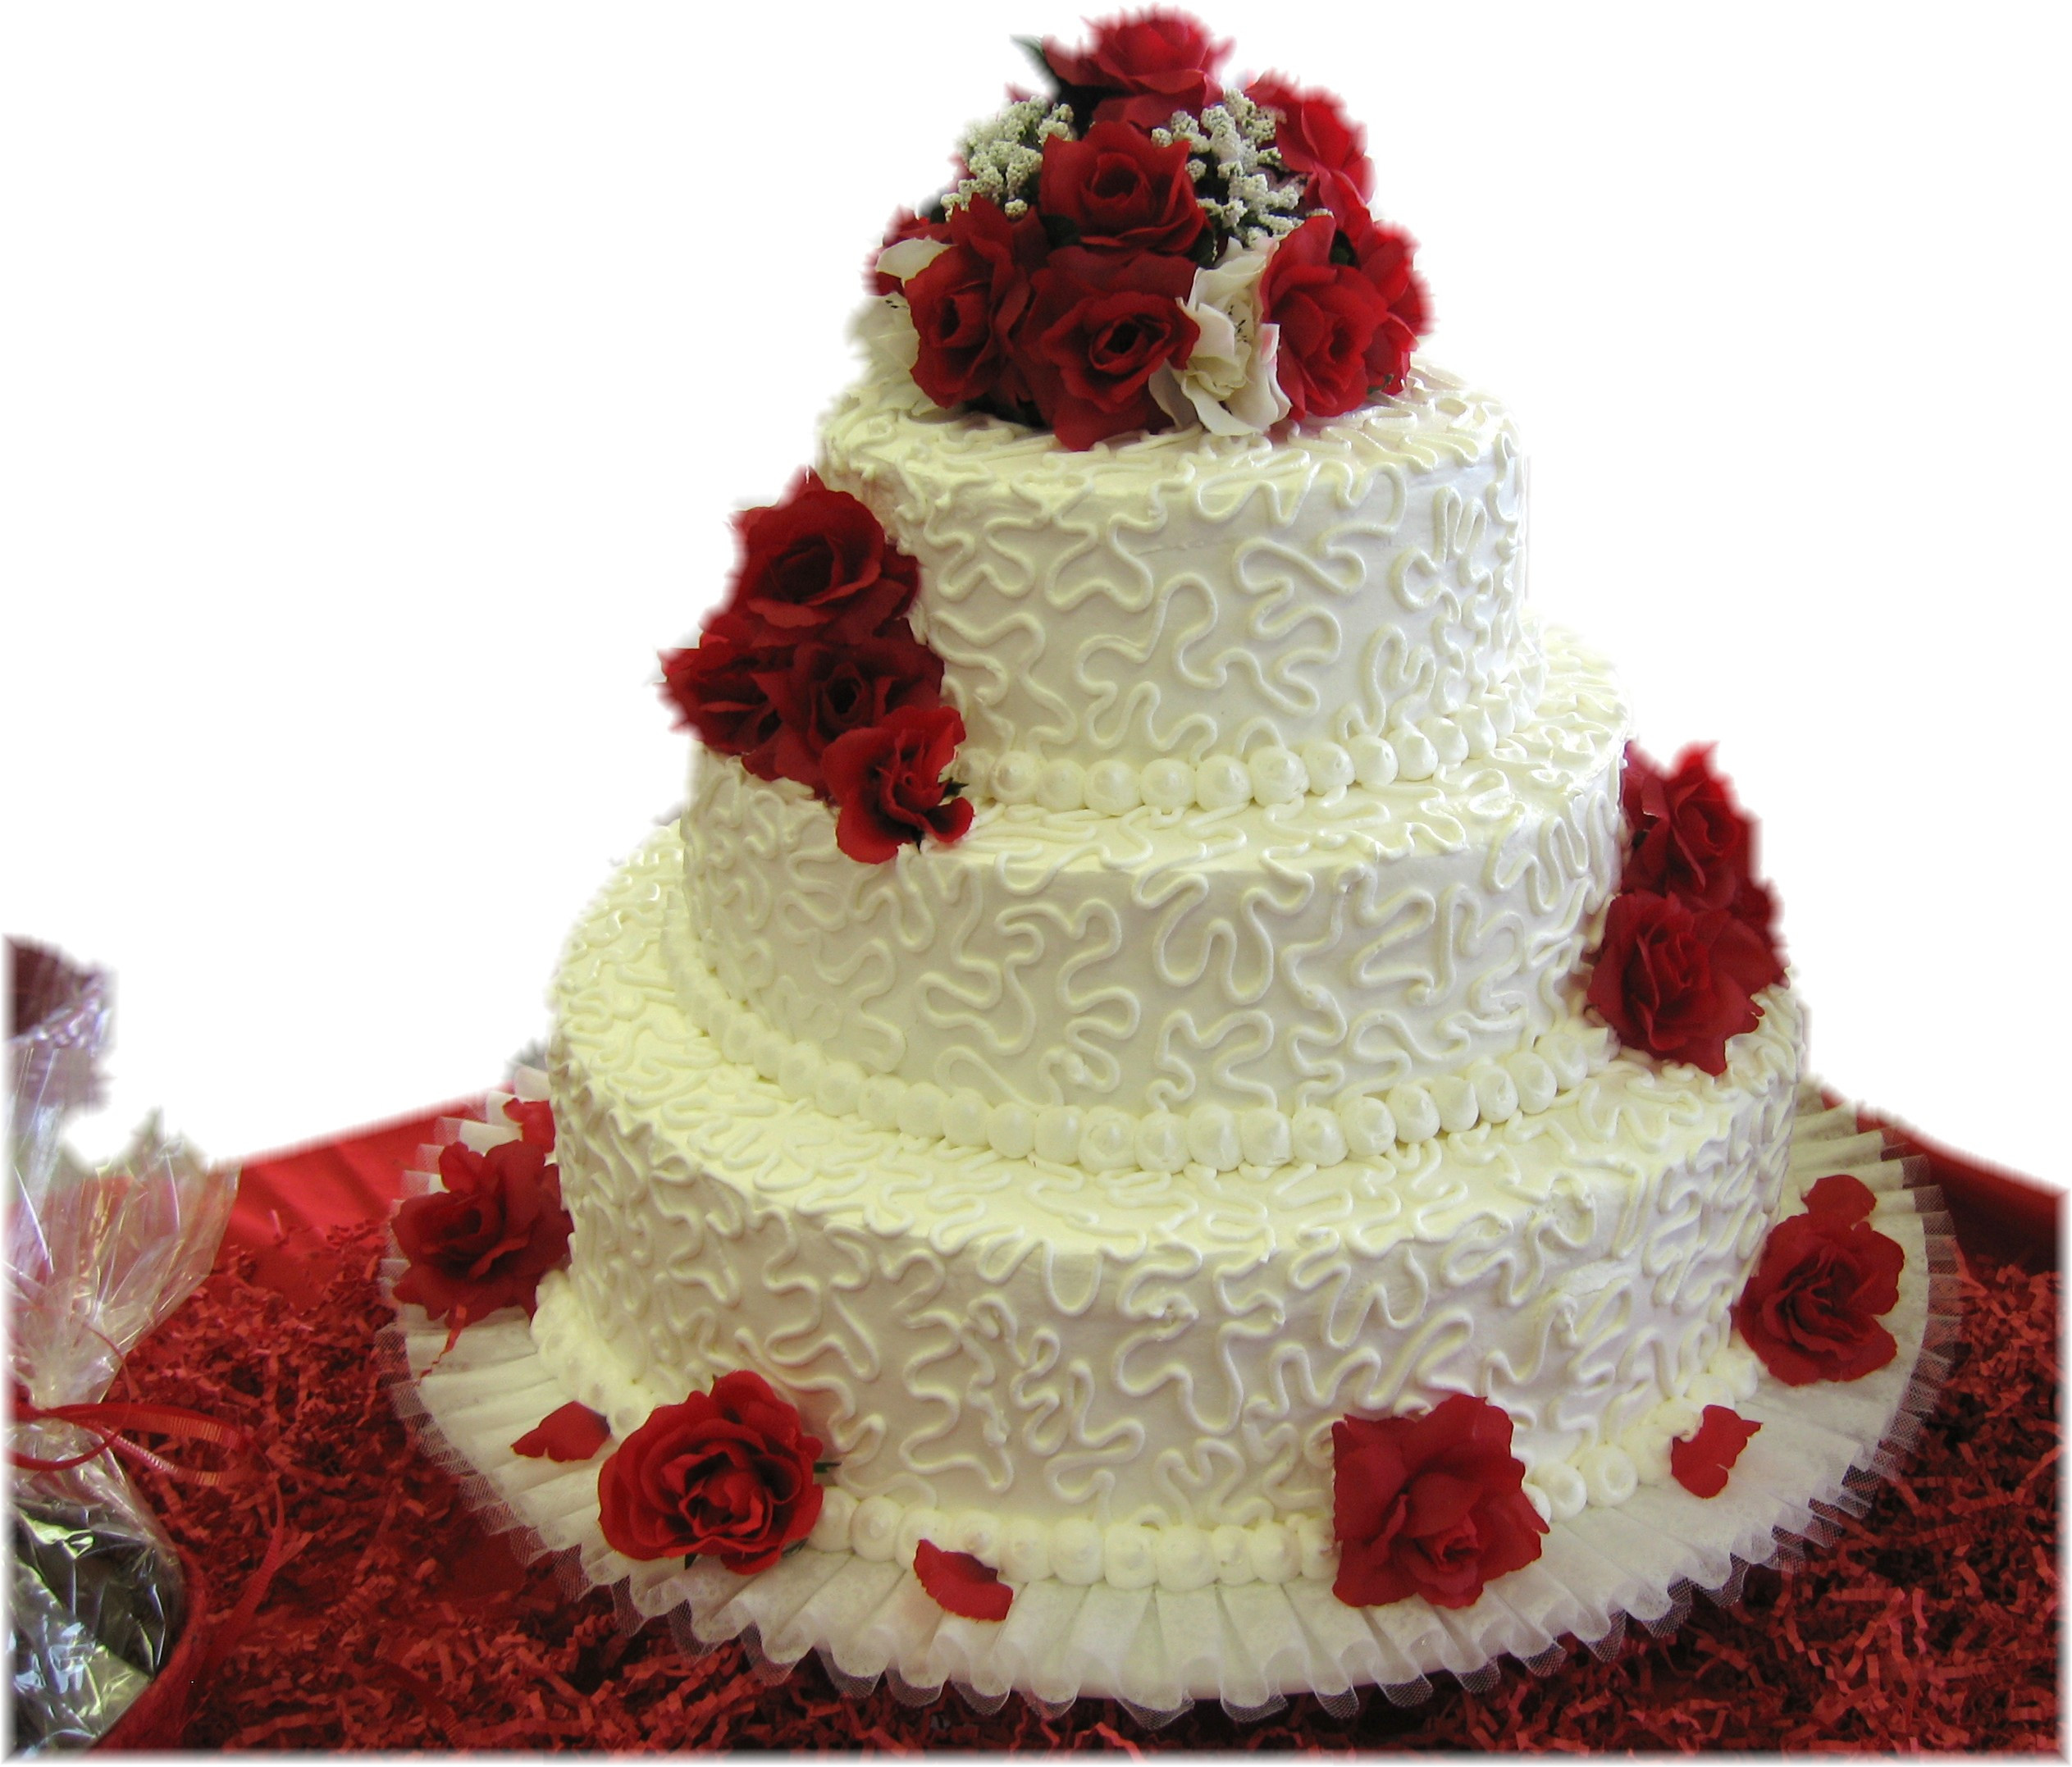 Brookshires Wedding Cakes
 Brookshires Wedding Cakes